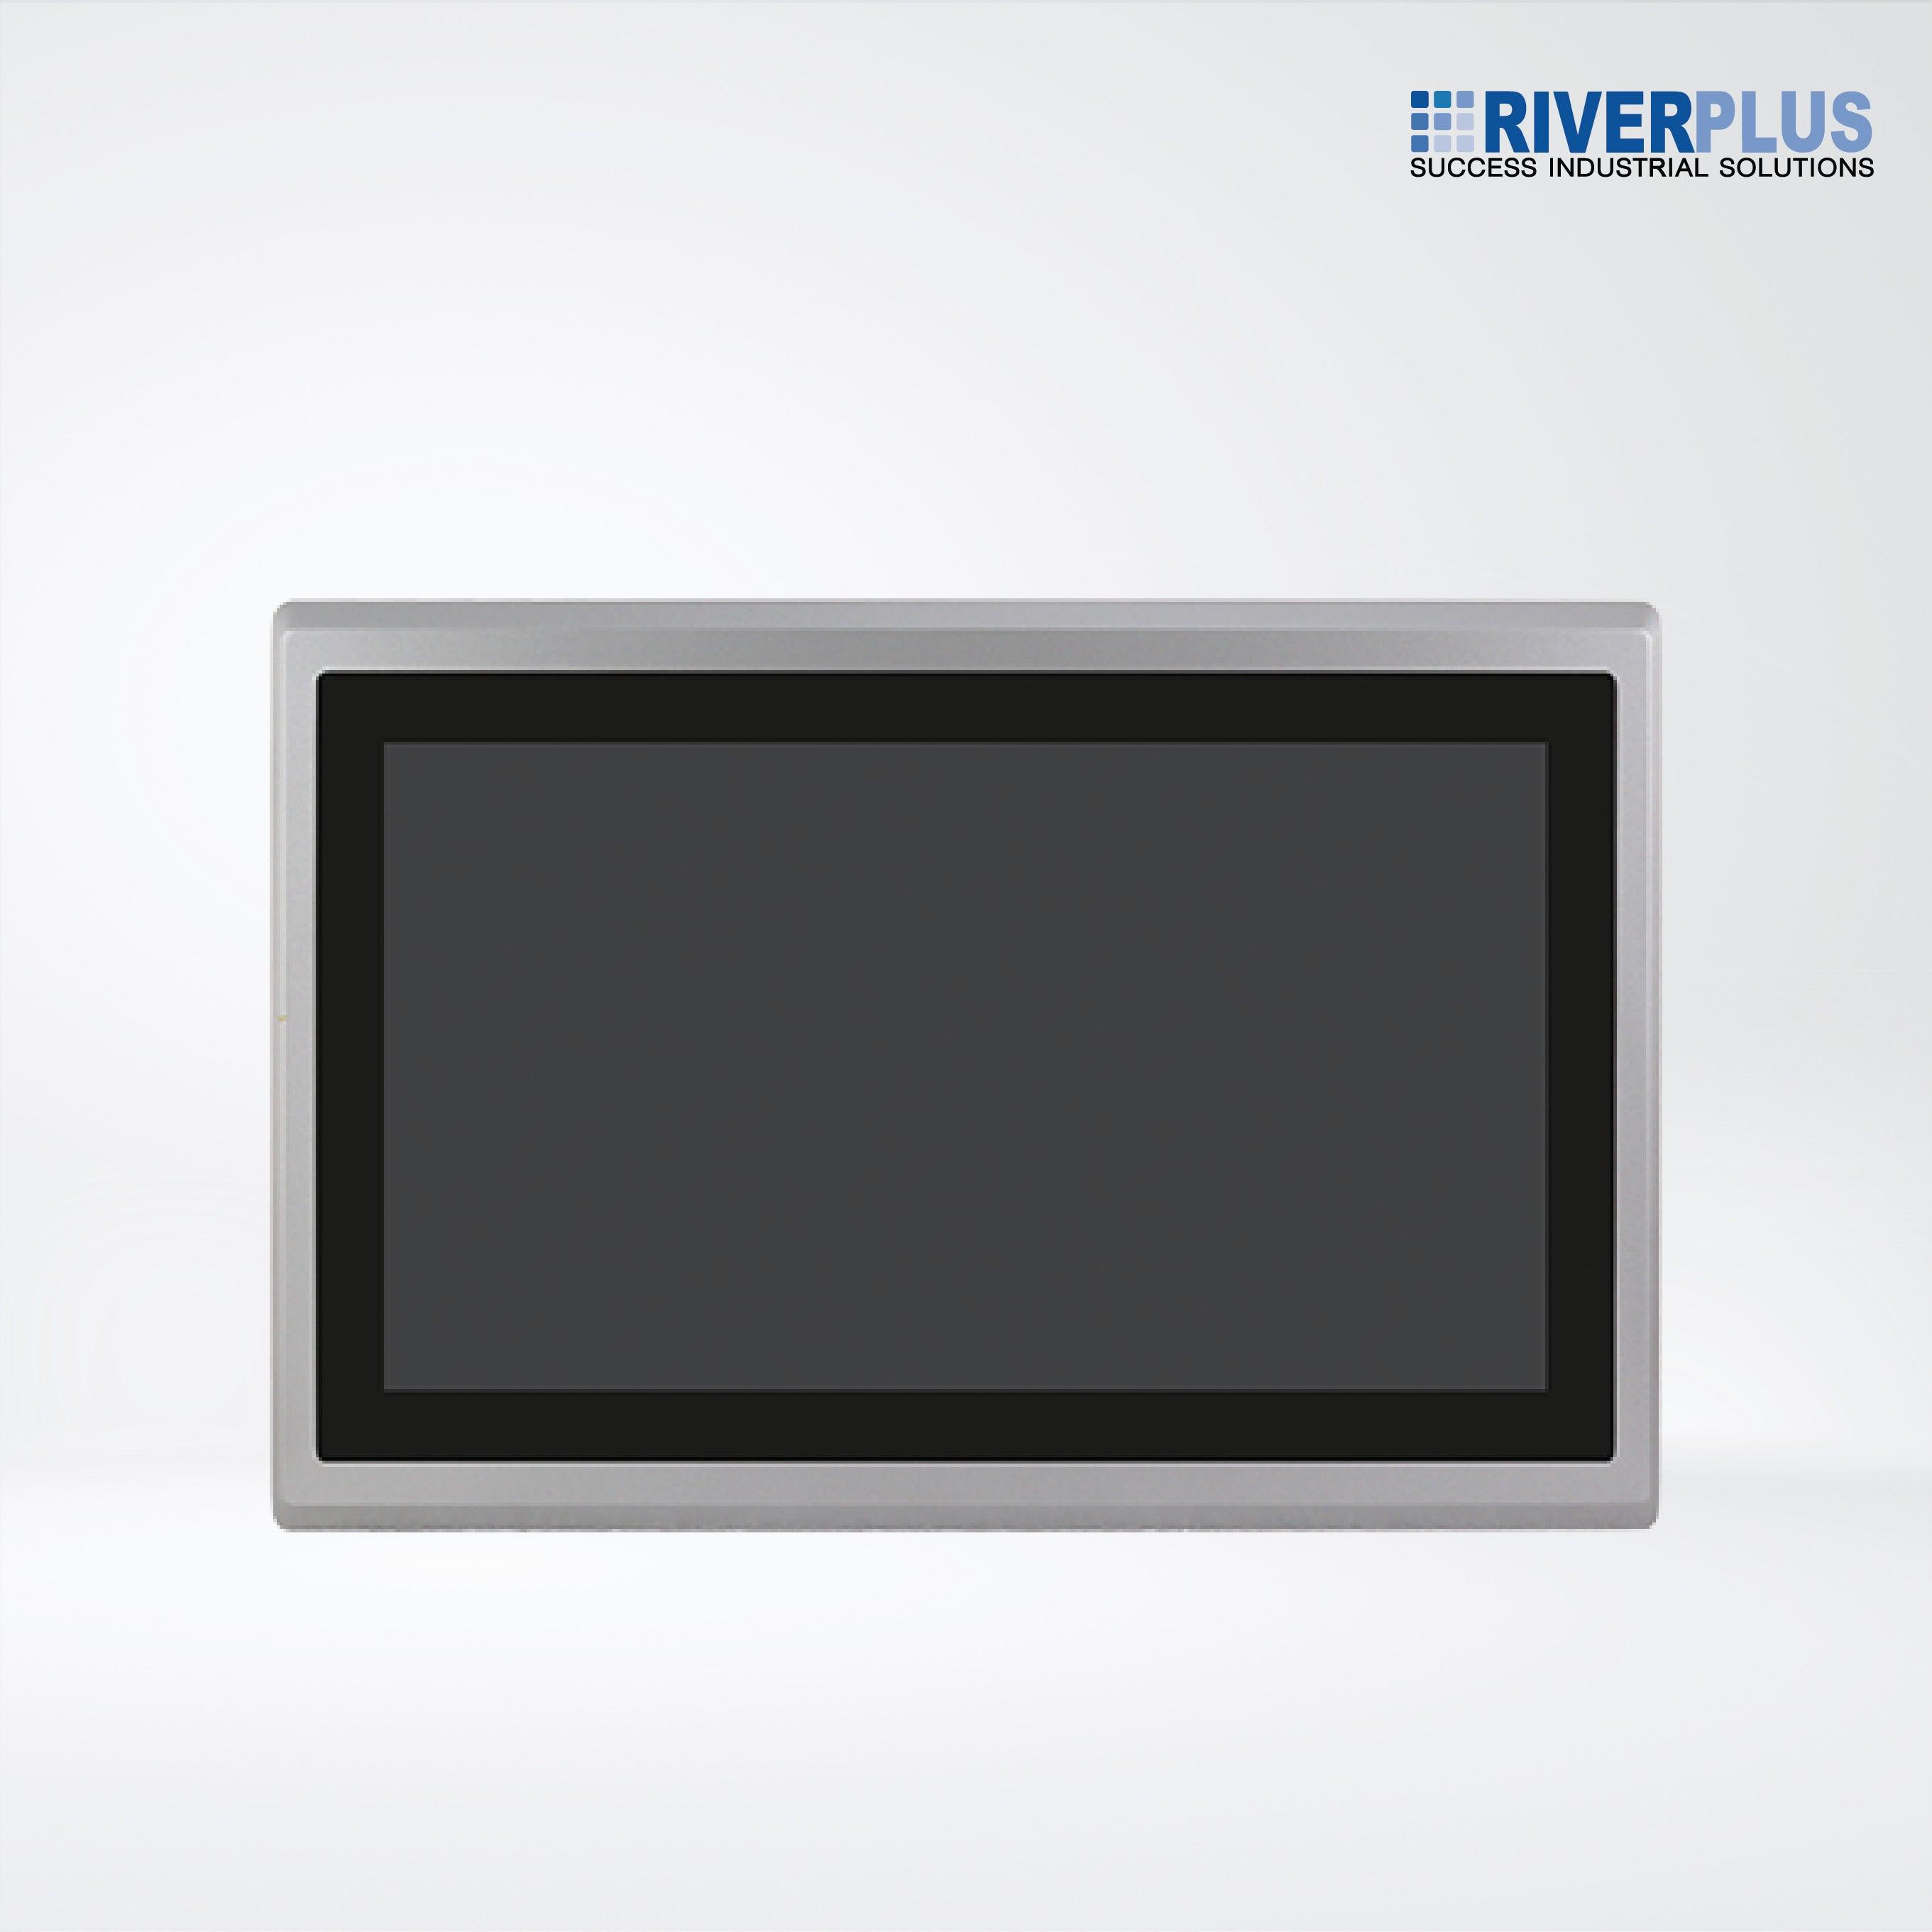 ViPAC-816R 15.6” Intel Celeron N2930 Fanless Expandable Panel PC - Riverplus